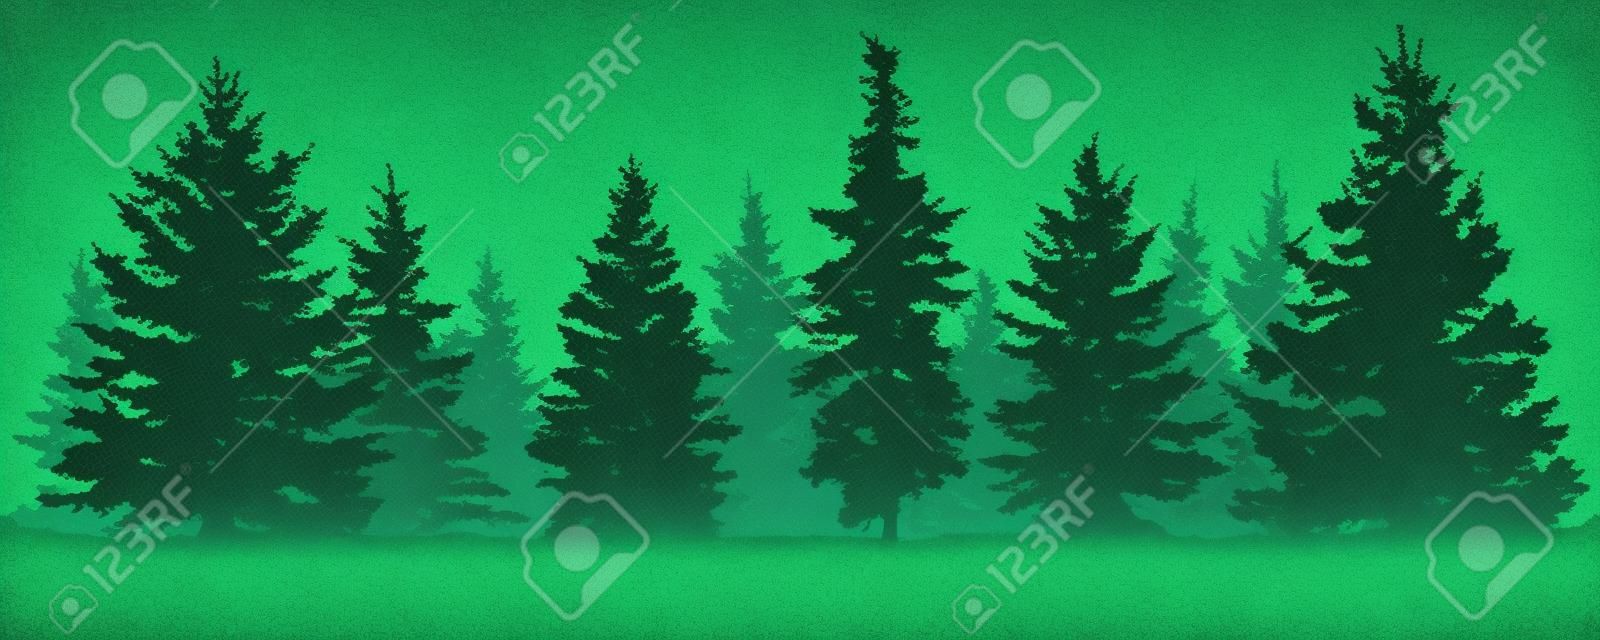 Silhueta de árvores de abeto de floresta. Abeto verde conífera. Vector no fundo branco